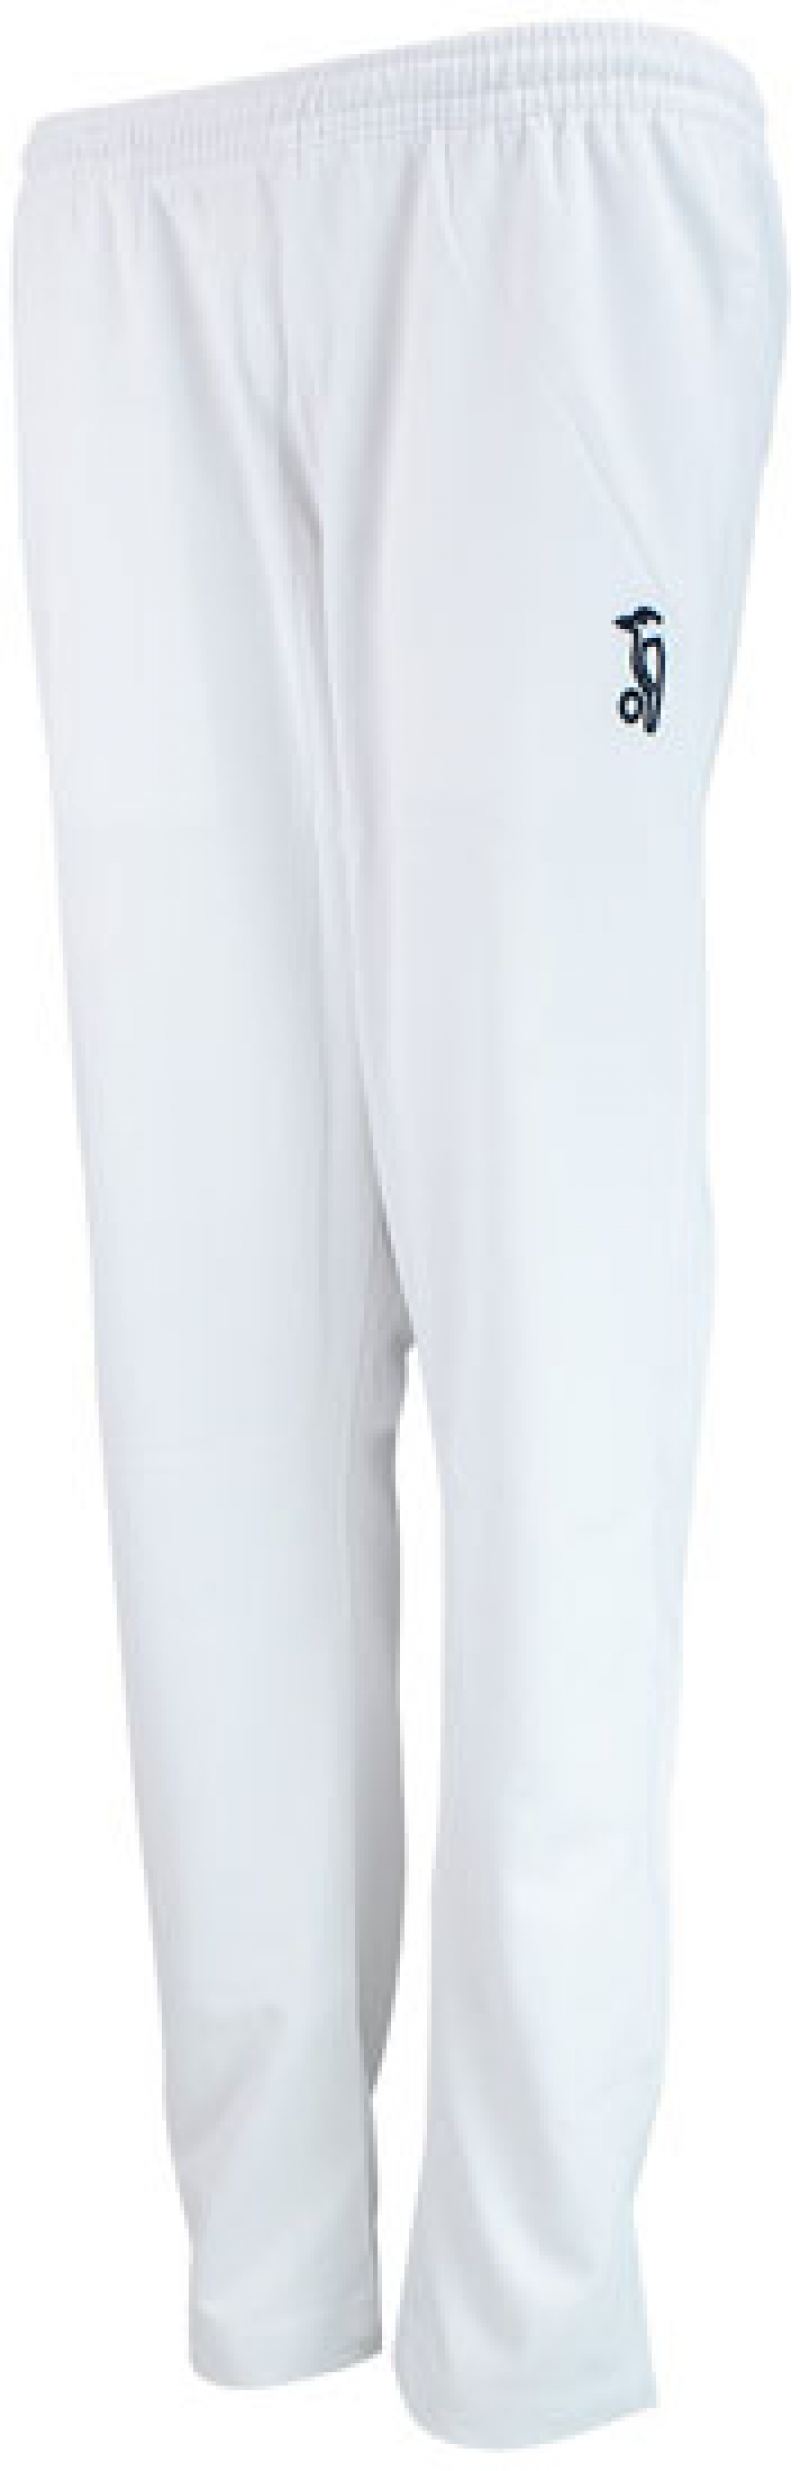 Kookaburra Ladies Match Trousers (Womens Sizes)